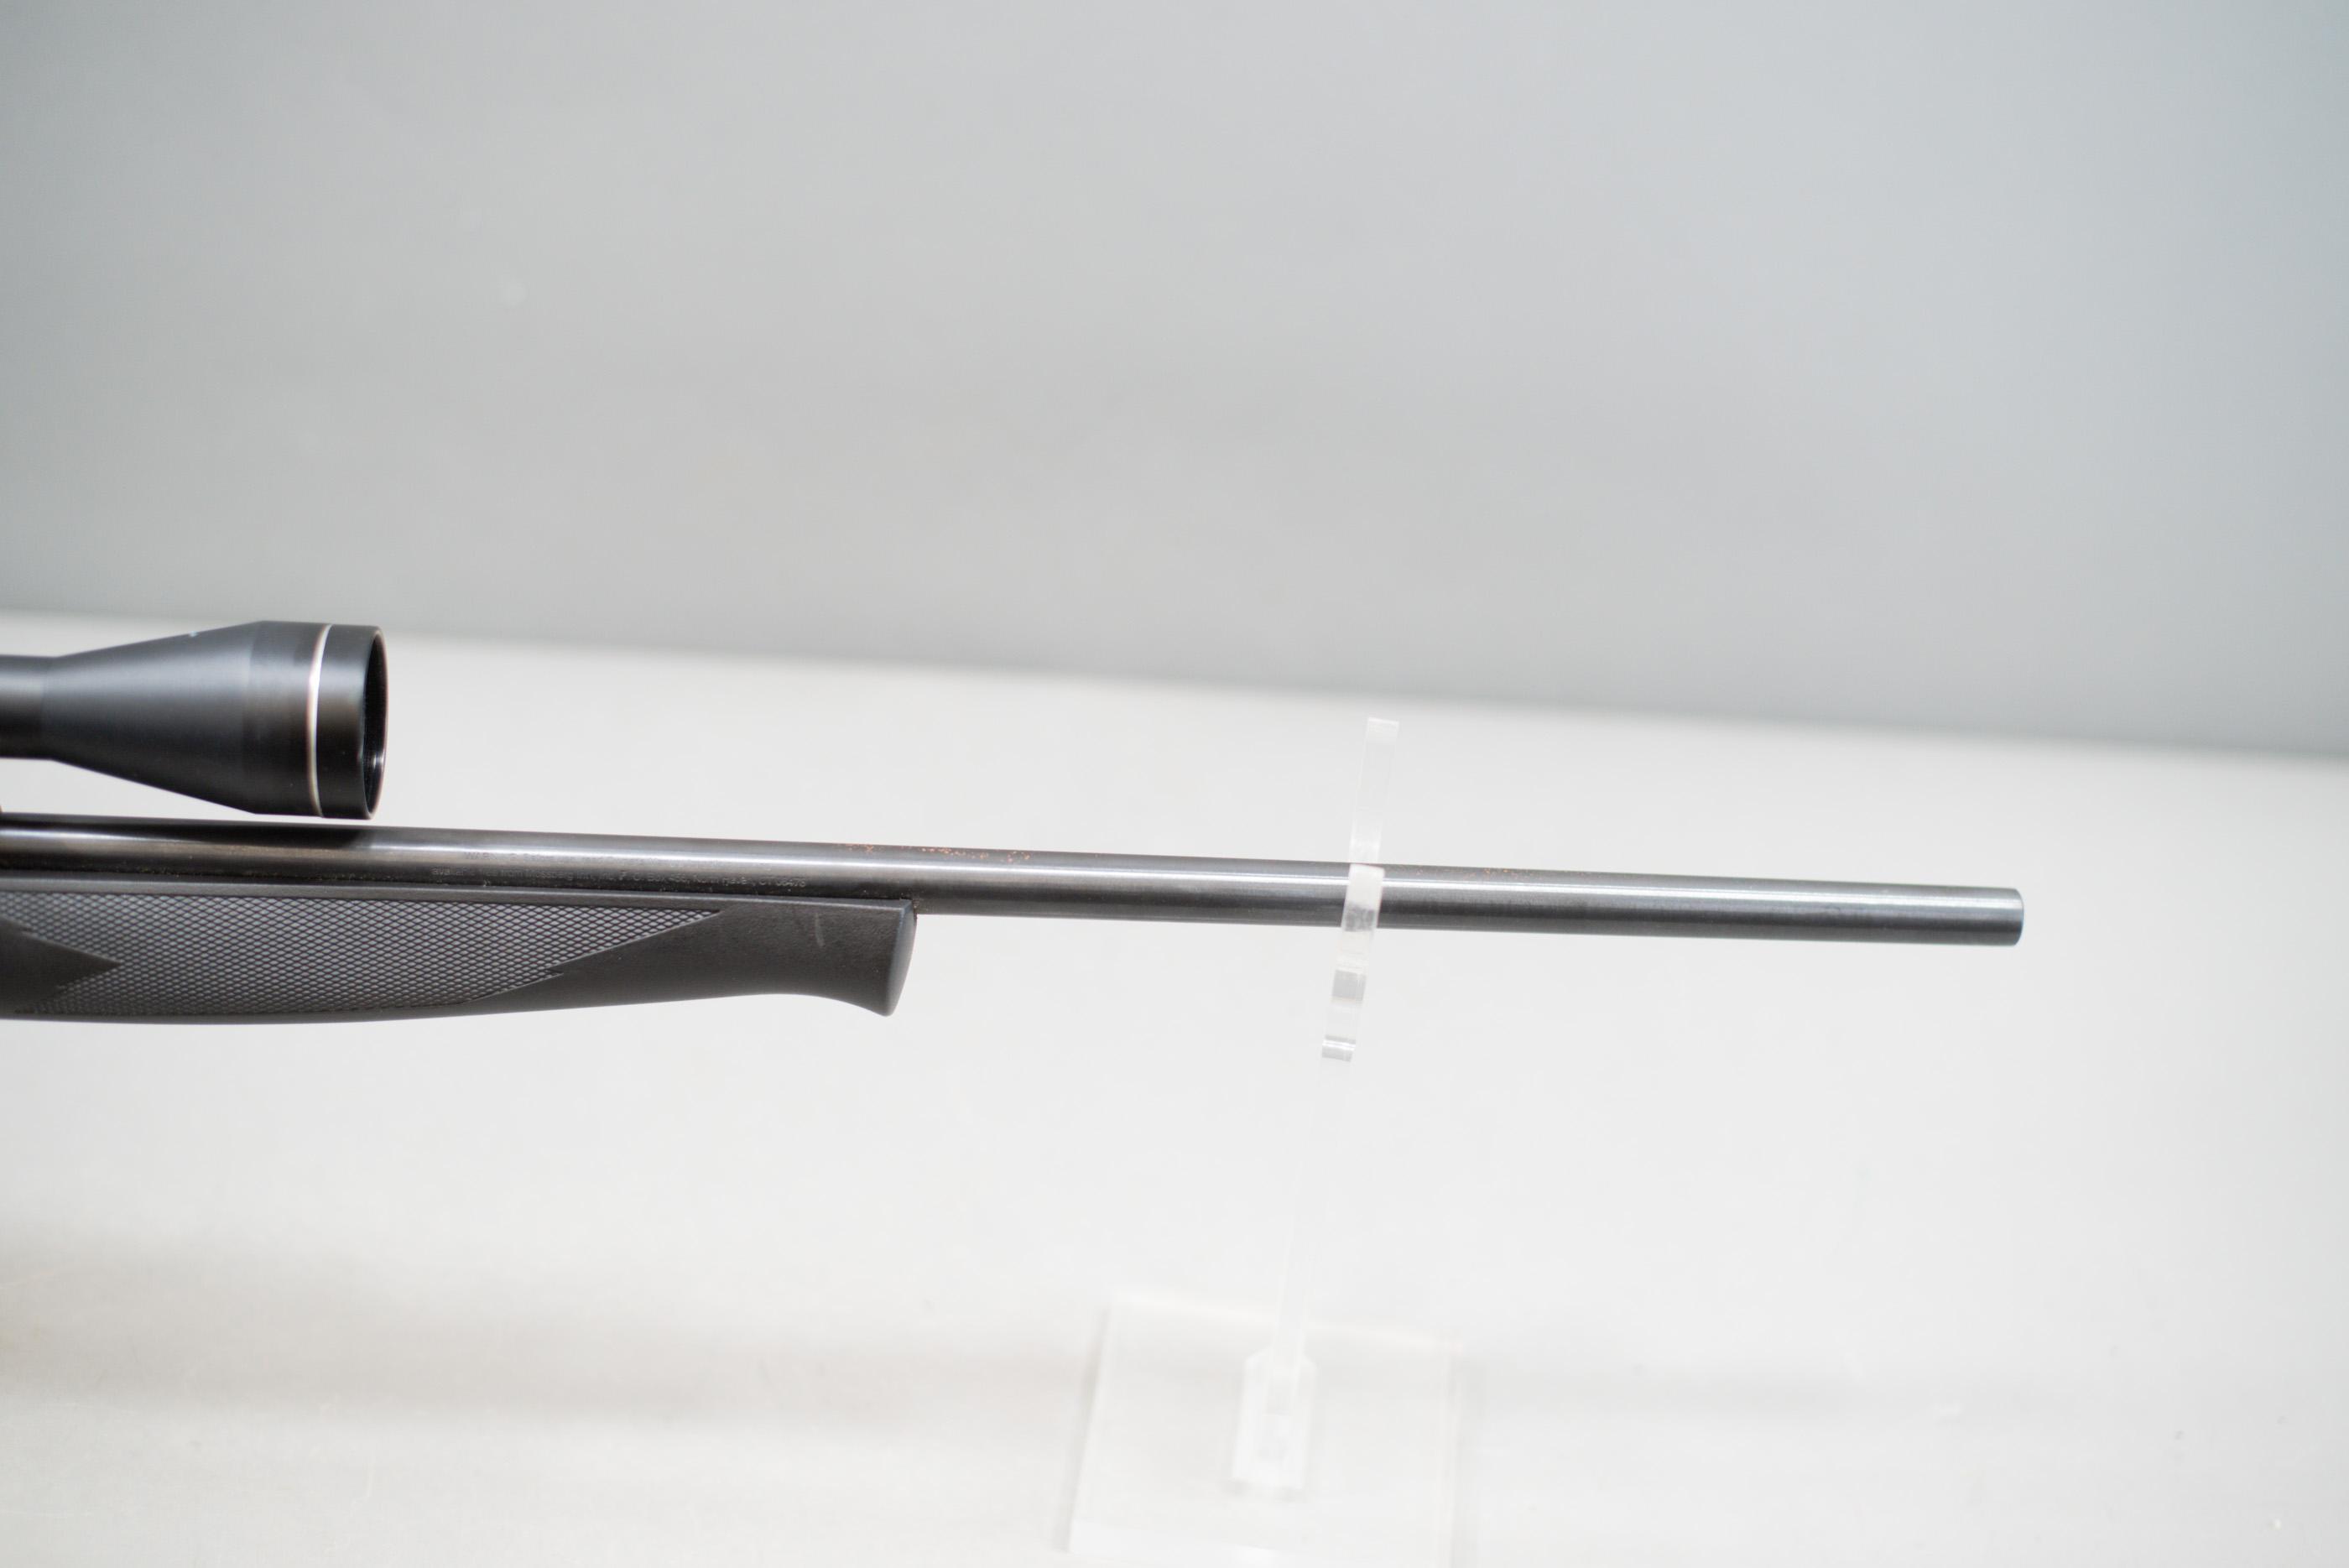 (R) Mossberg Model 817 .17HMR Rifle